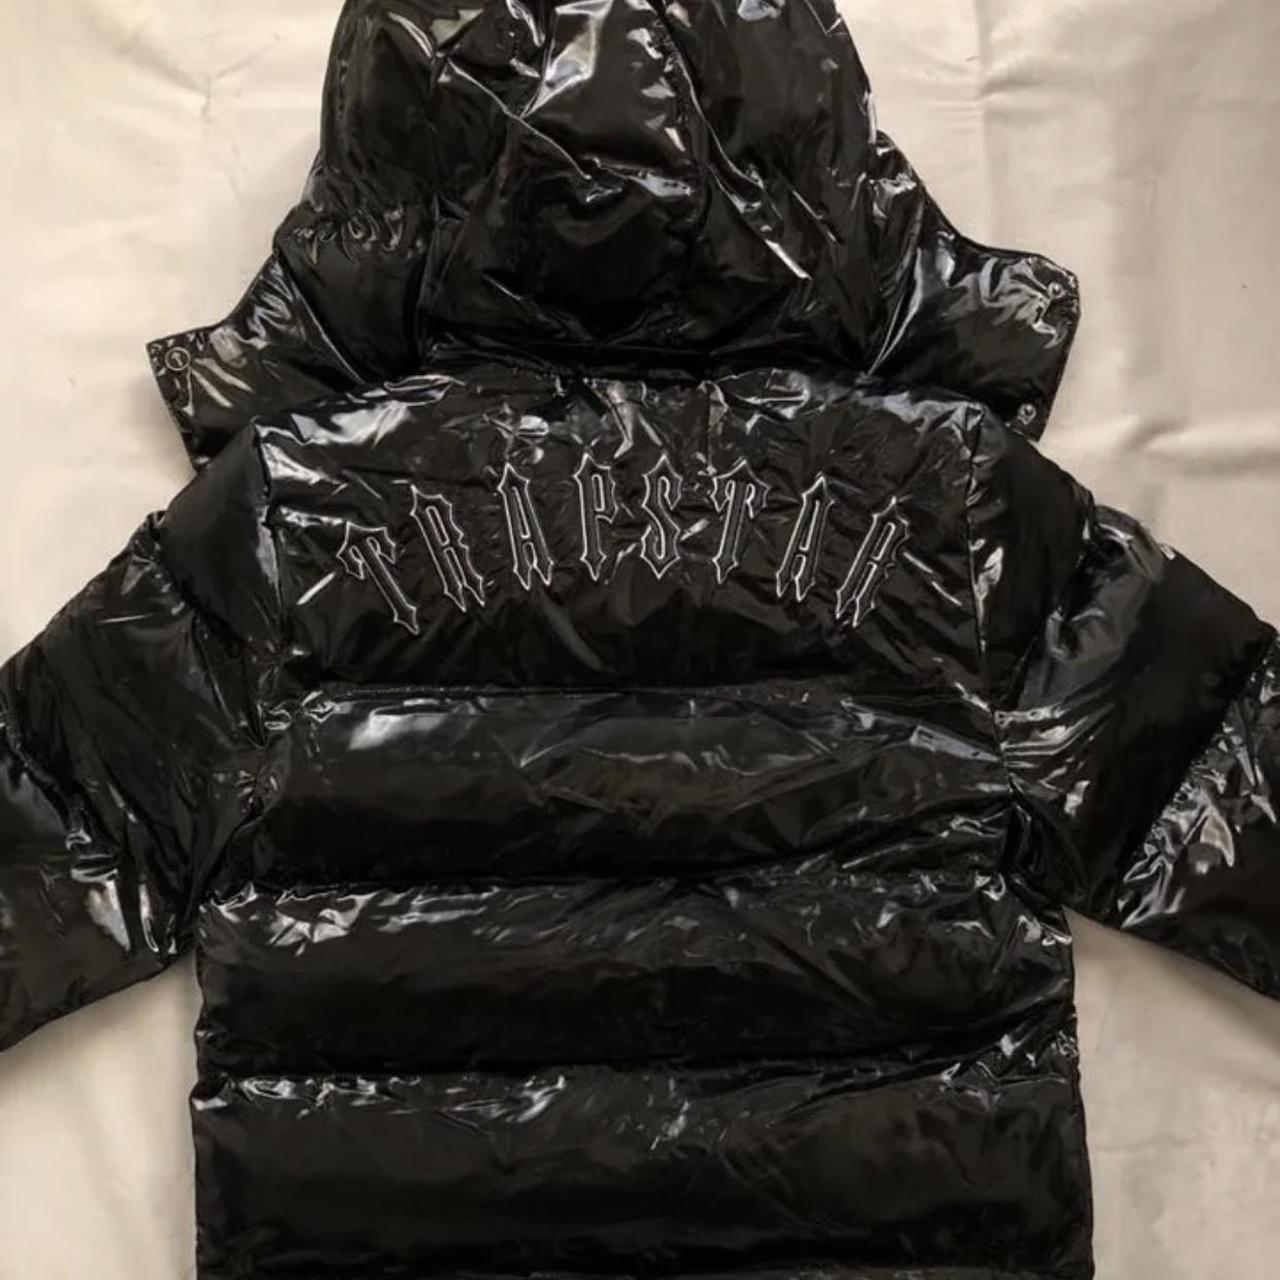 Shiny trapstar jacket message before buying - Depop